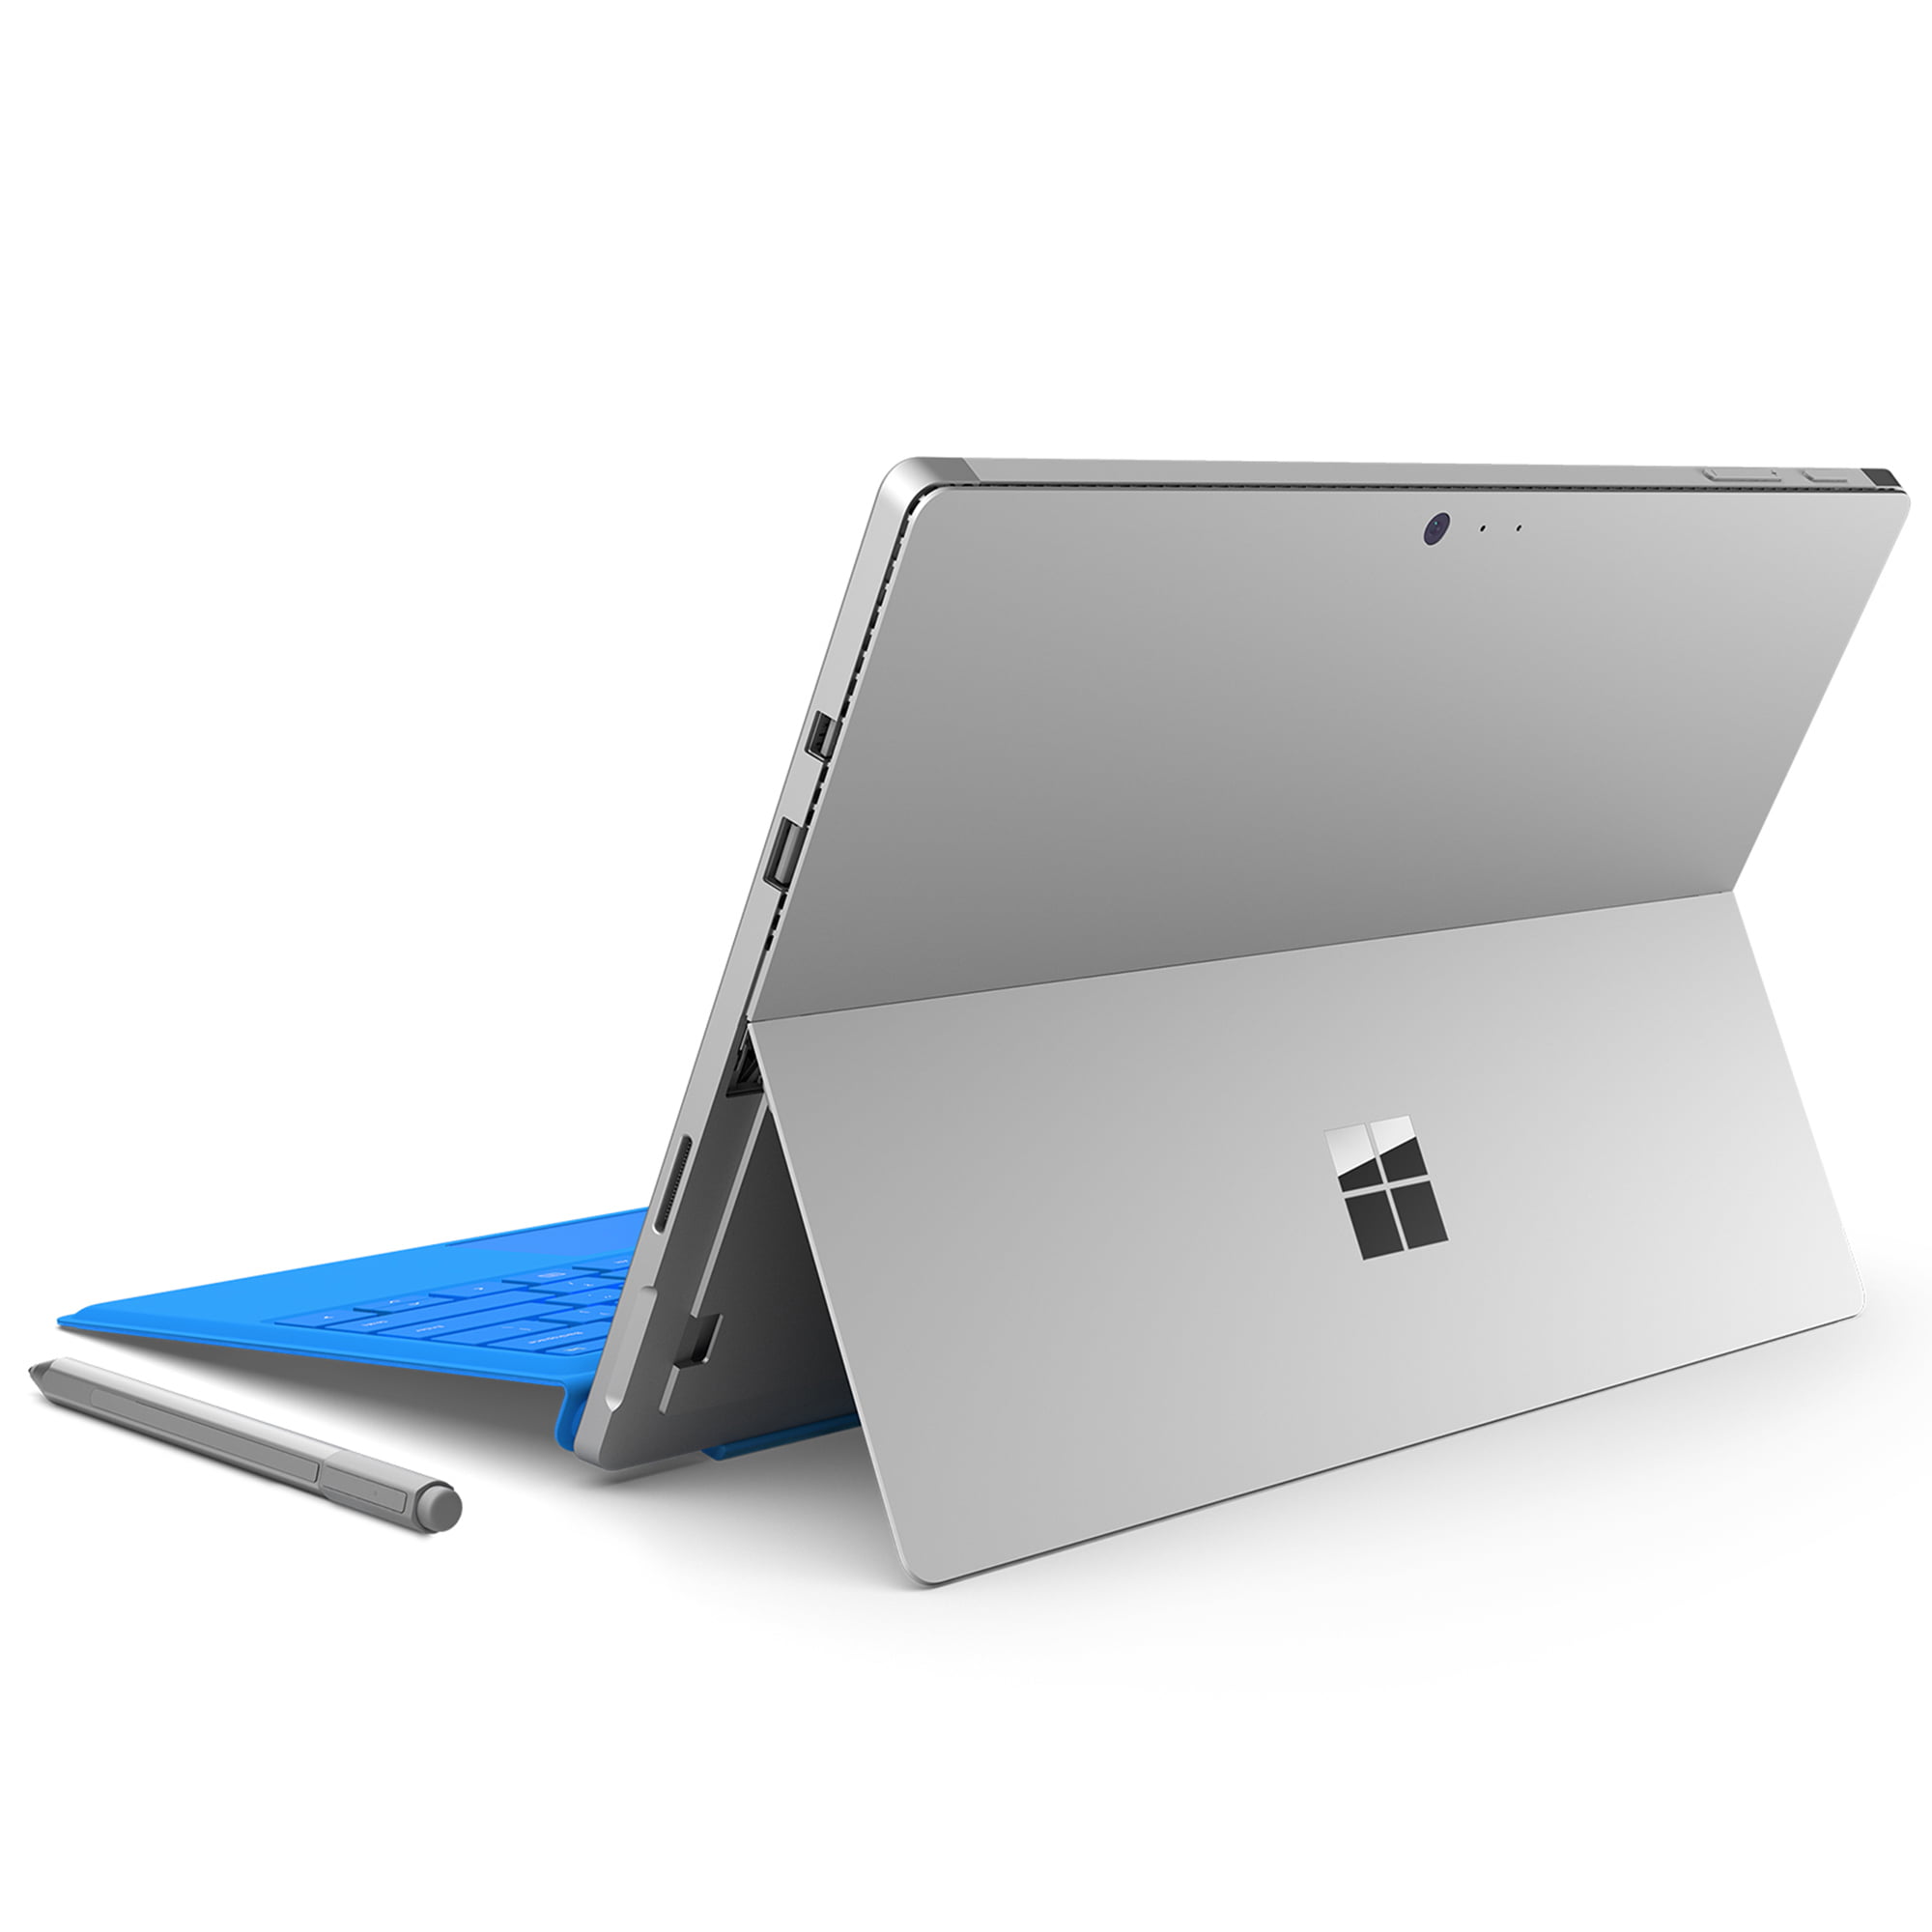 PC/タブレット ノートPC Microsoft Surface Pro 4 Tablet Computer - Walmart.com